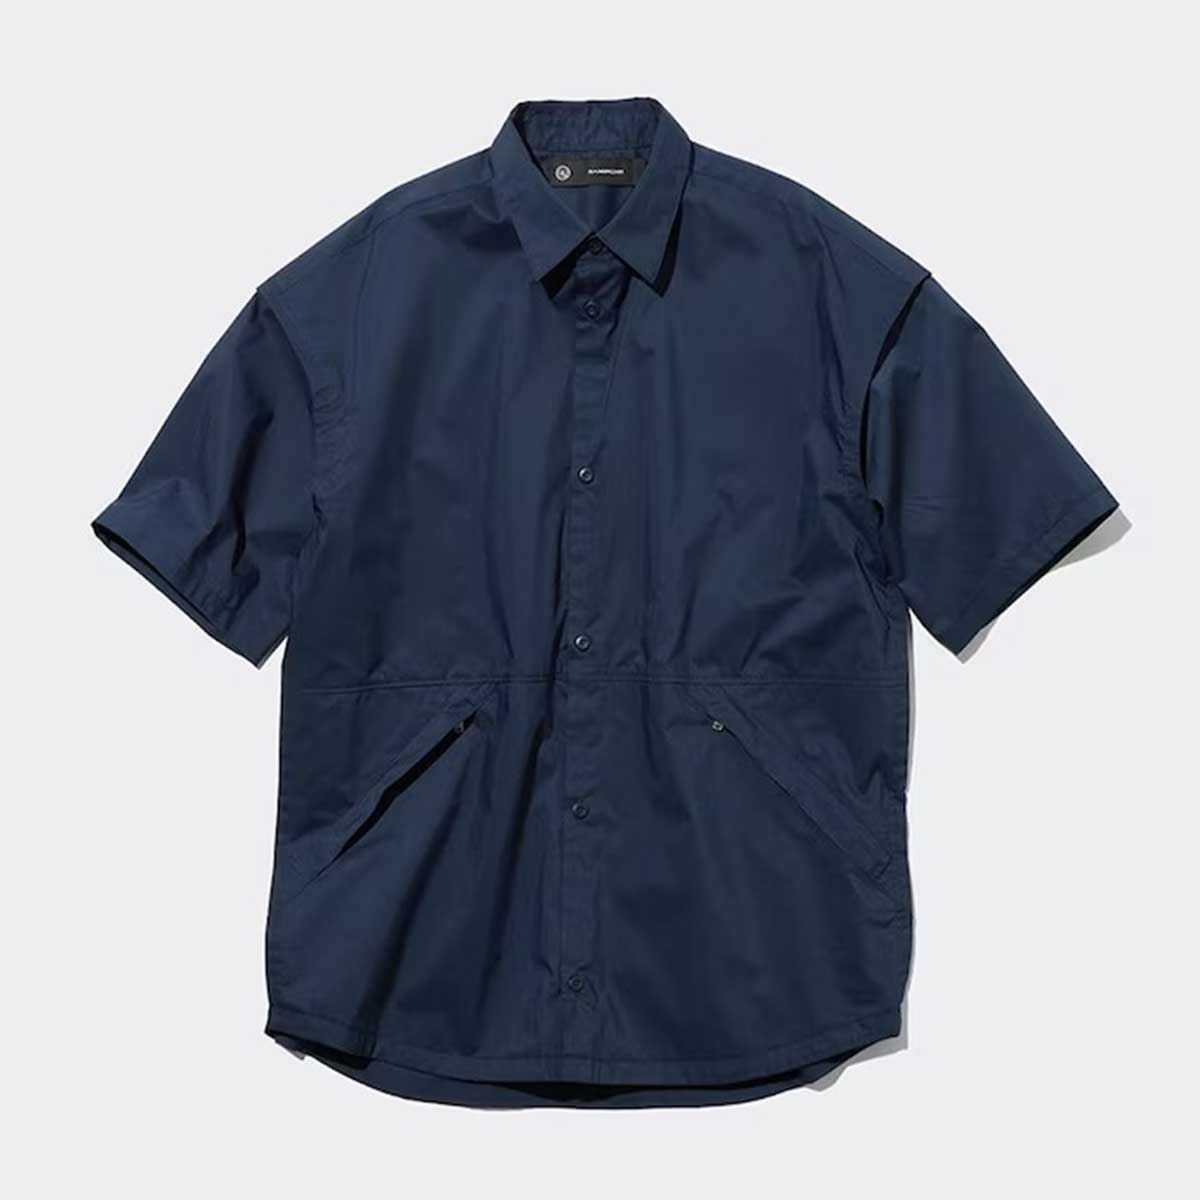 GU「ジップポケットシャツ(5分袖) UNDERCOVER」